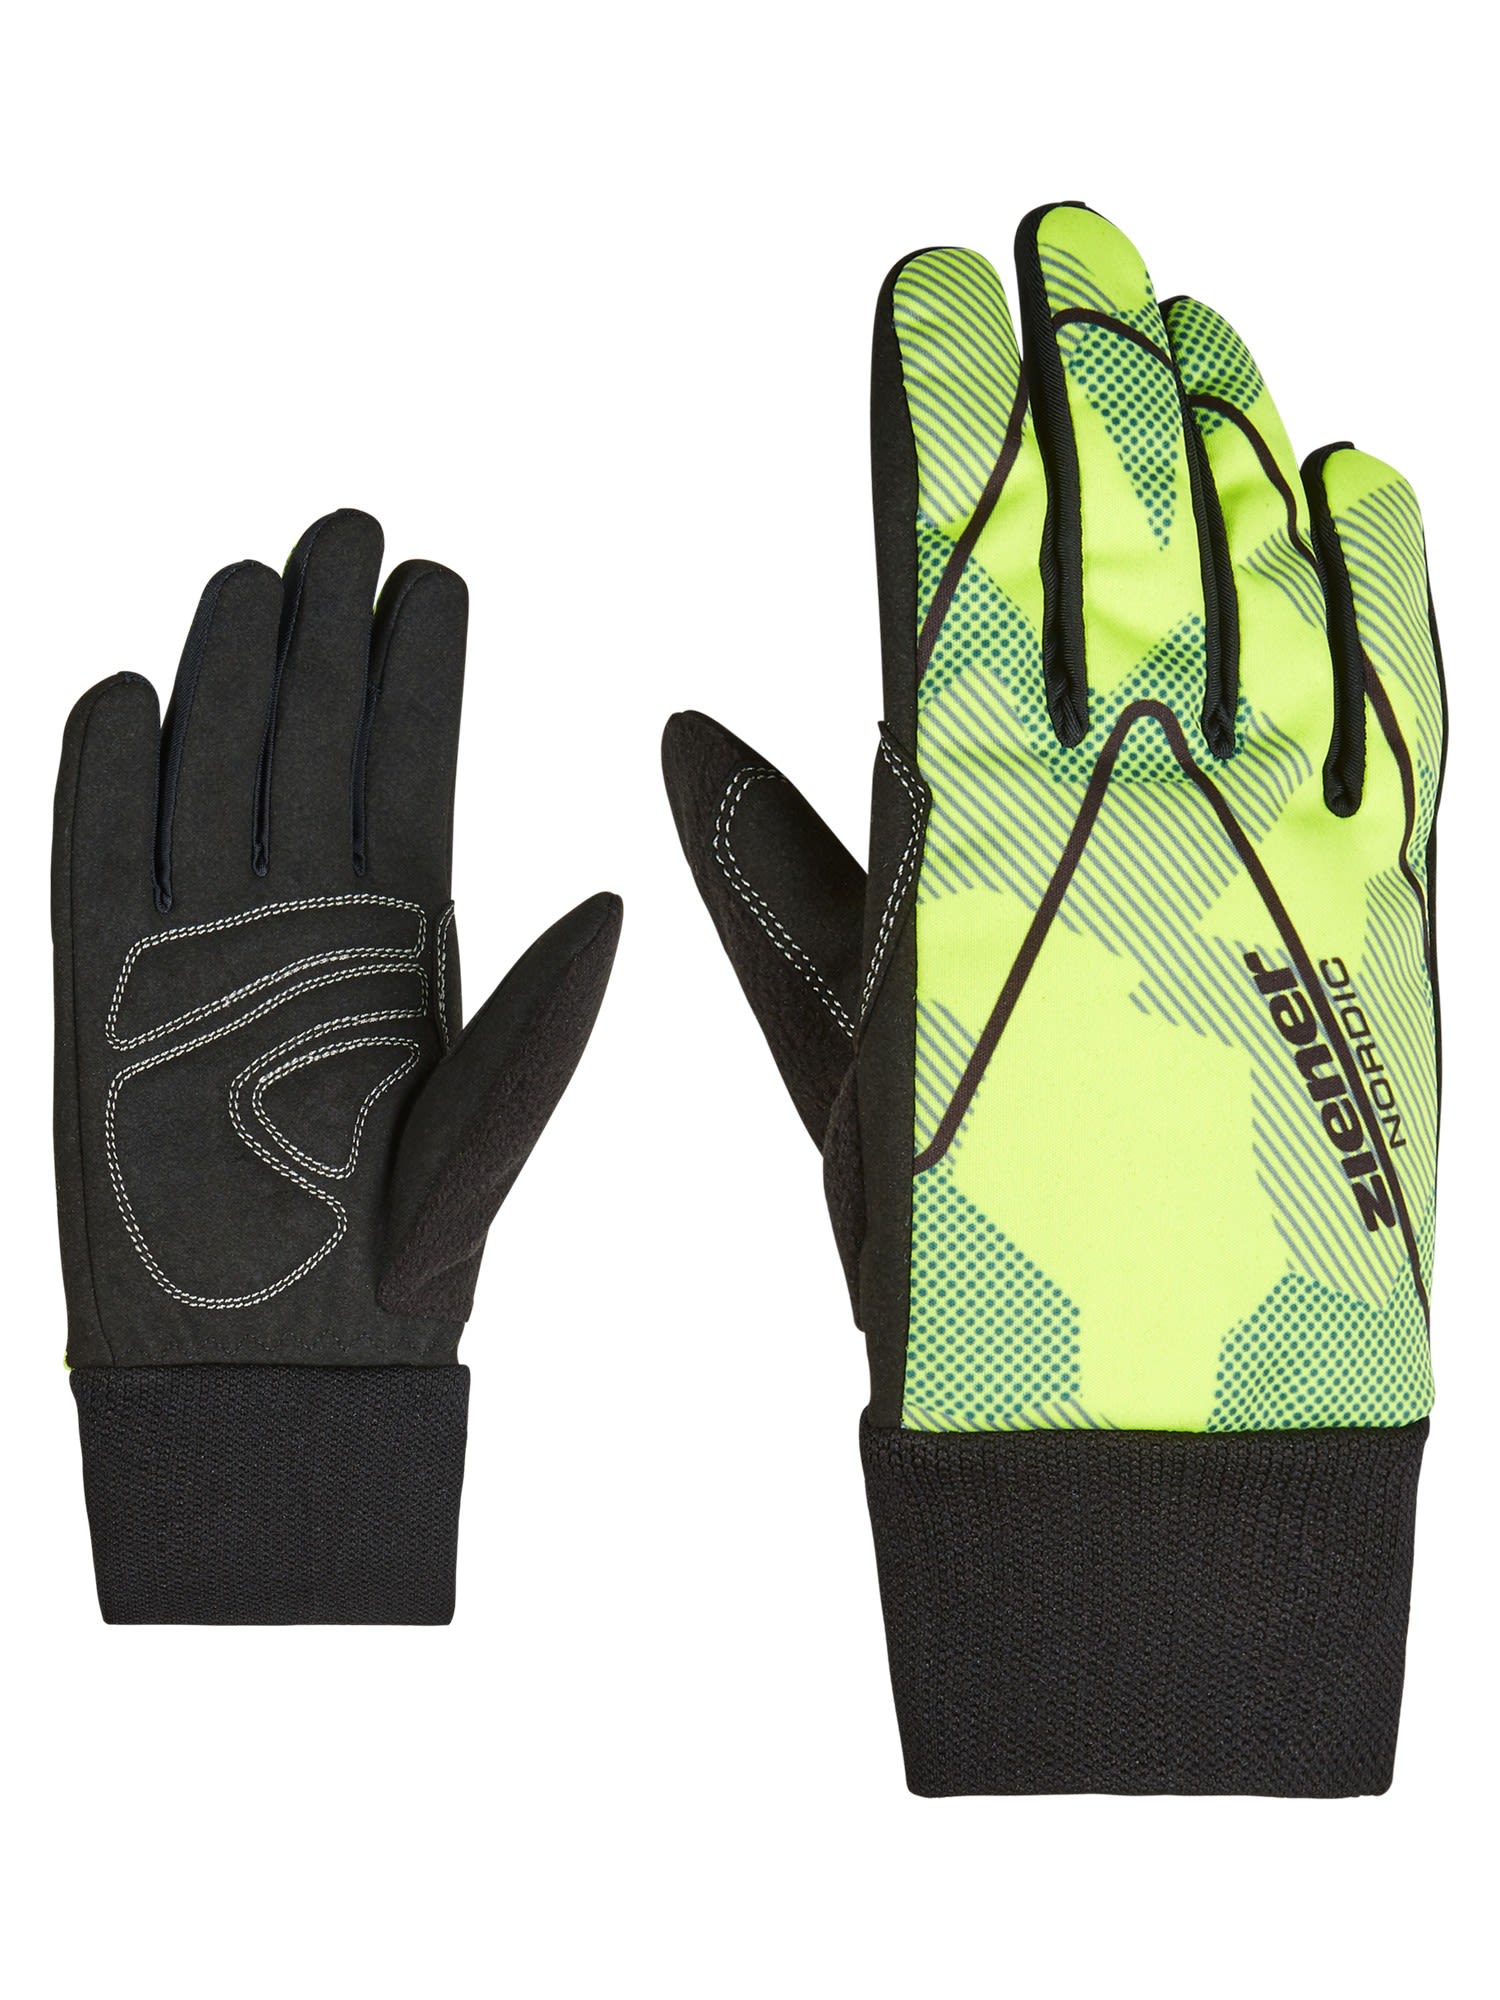 Ziener Junior Unico Glove | eBay